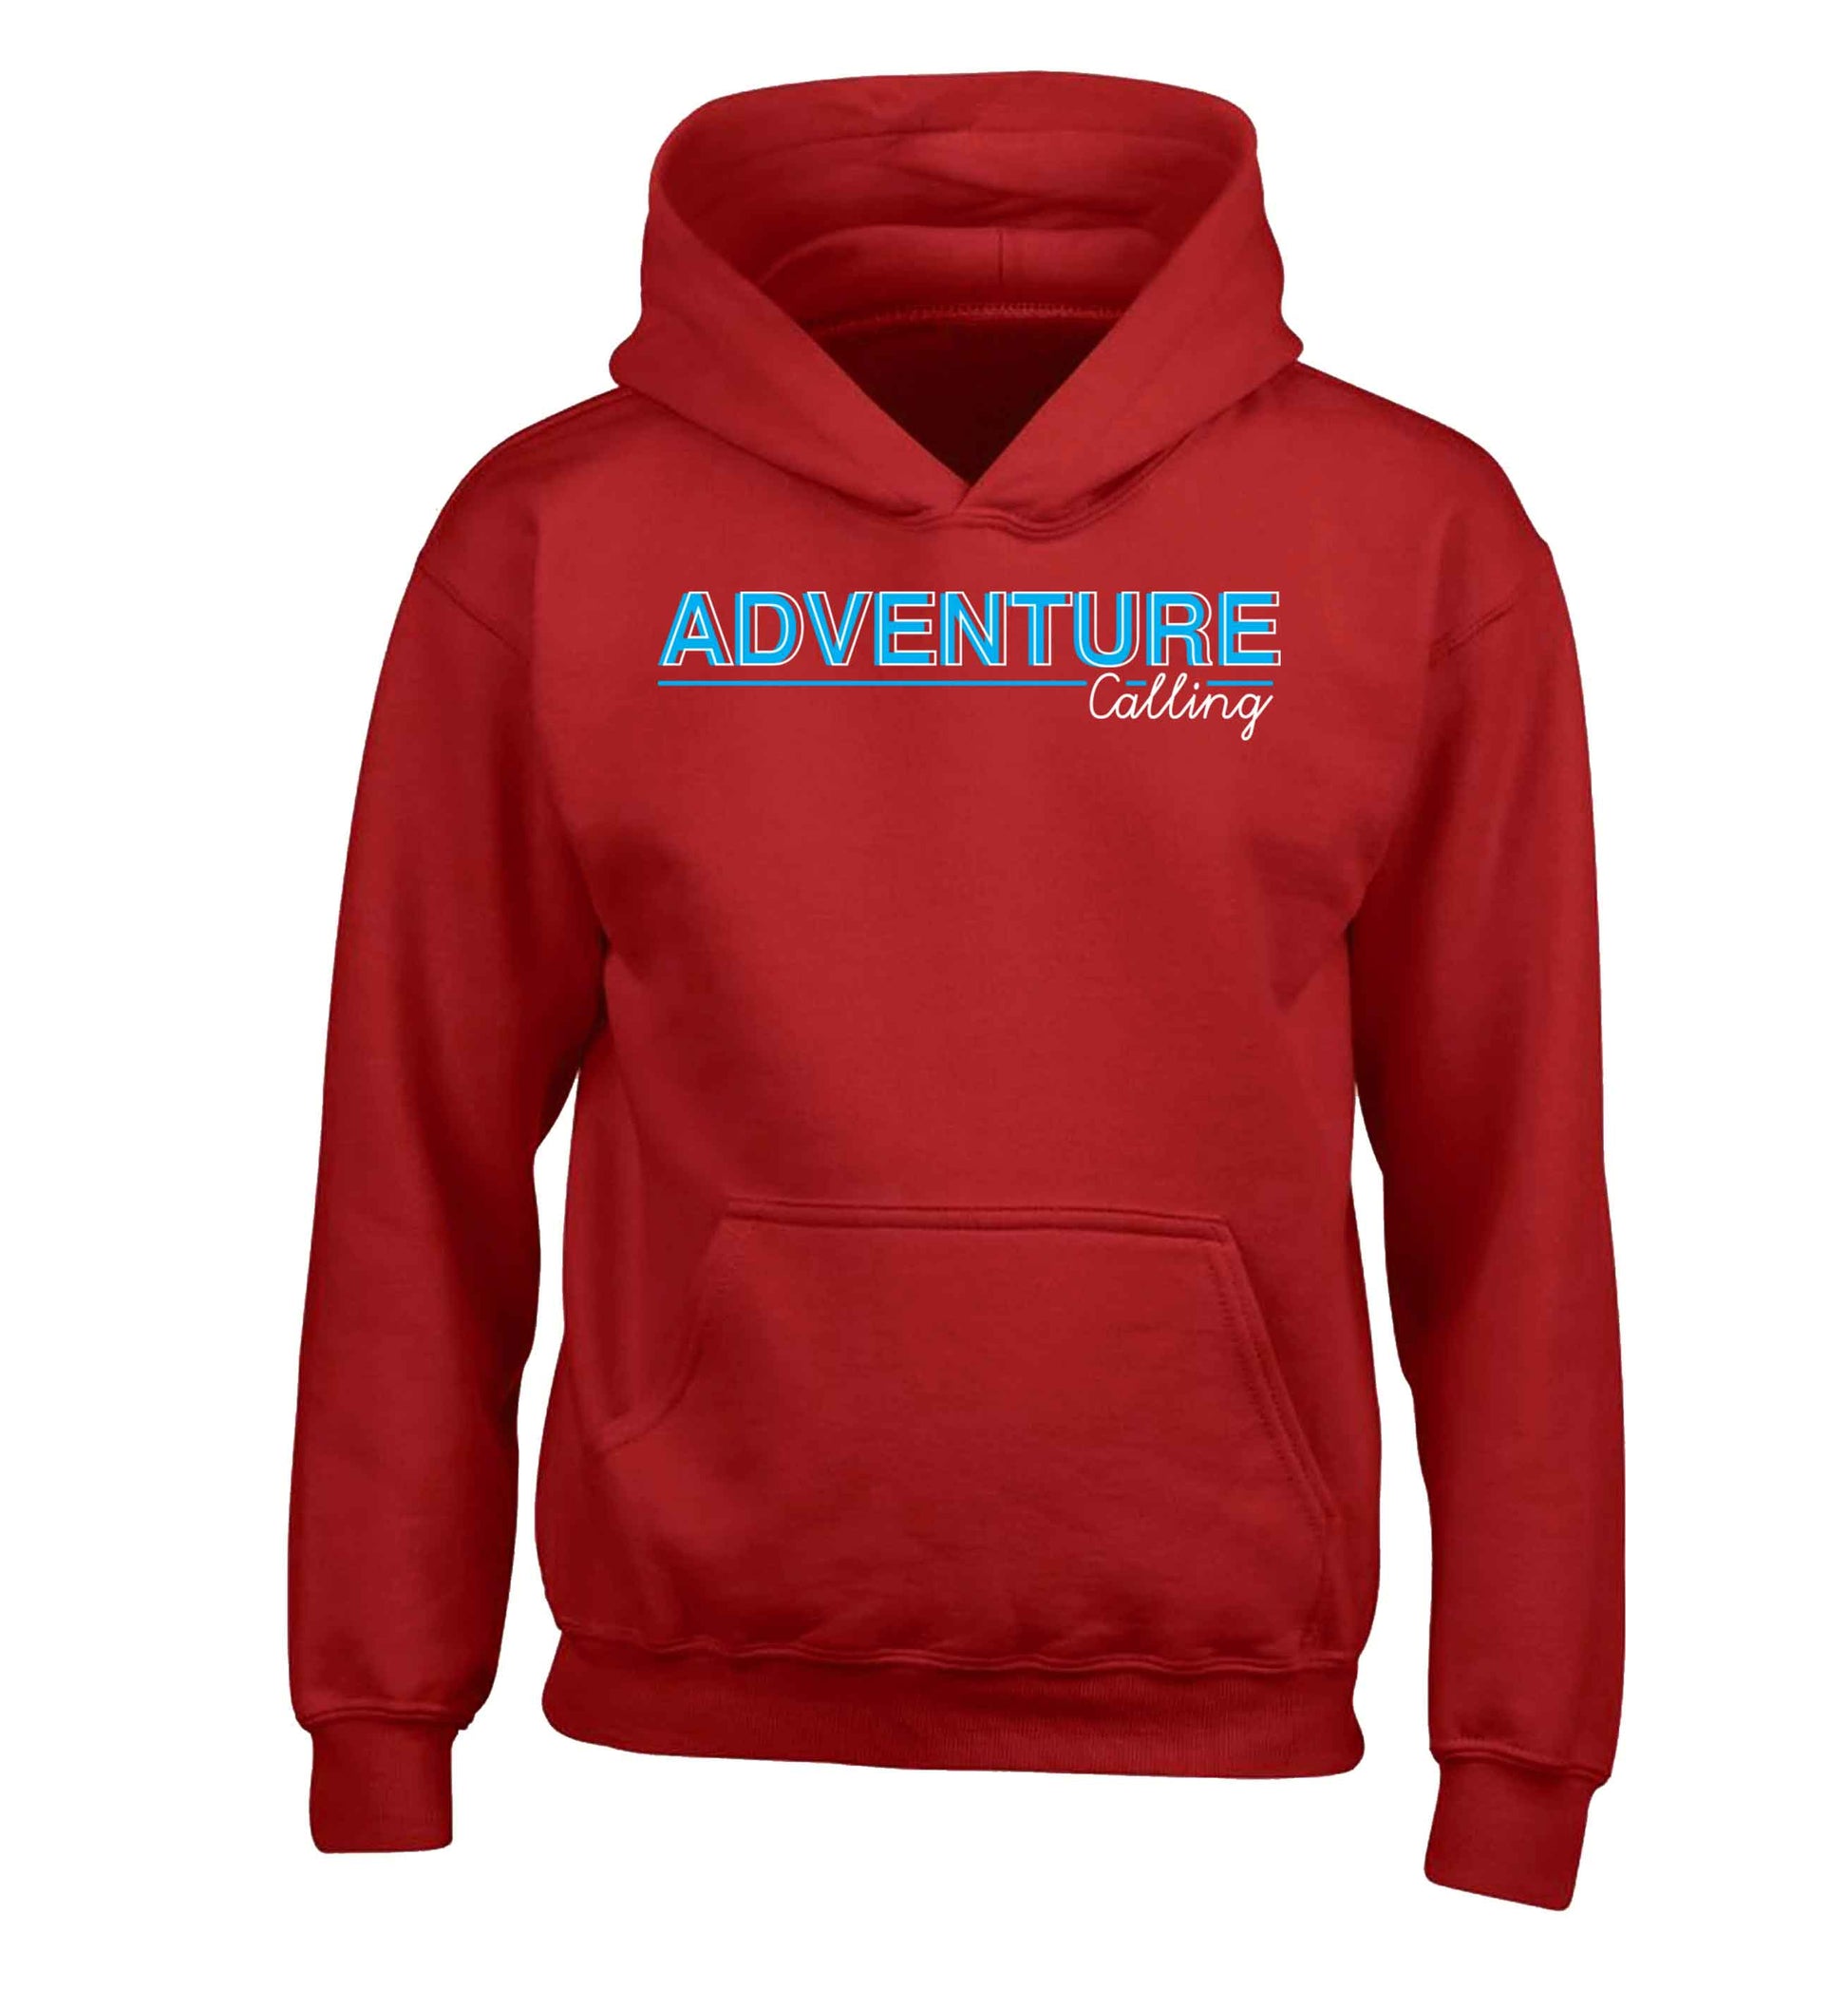 Adventure calling children's red hoodie 12-13 Years